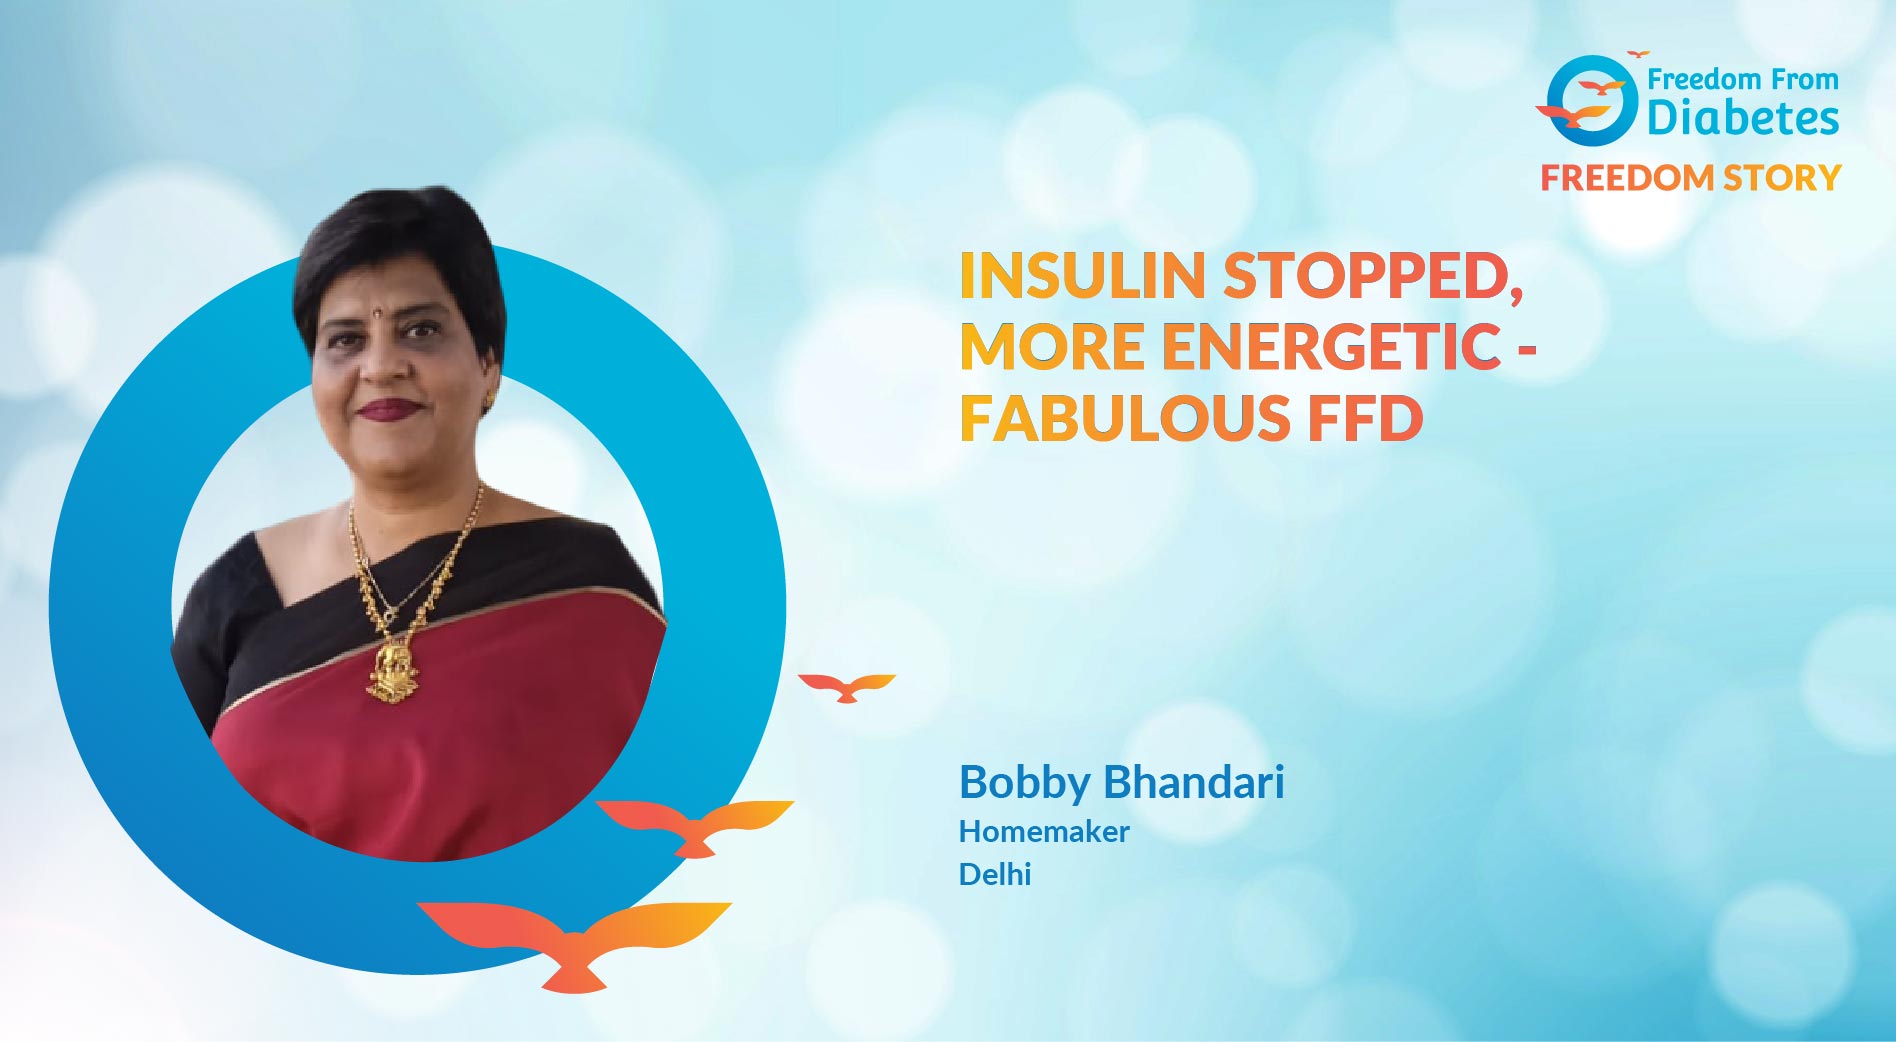 Bobby Bhandari: An Inspirational story of insulin stoppage